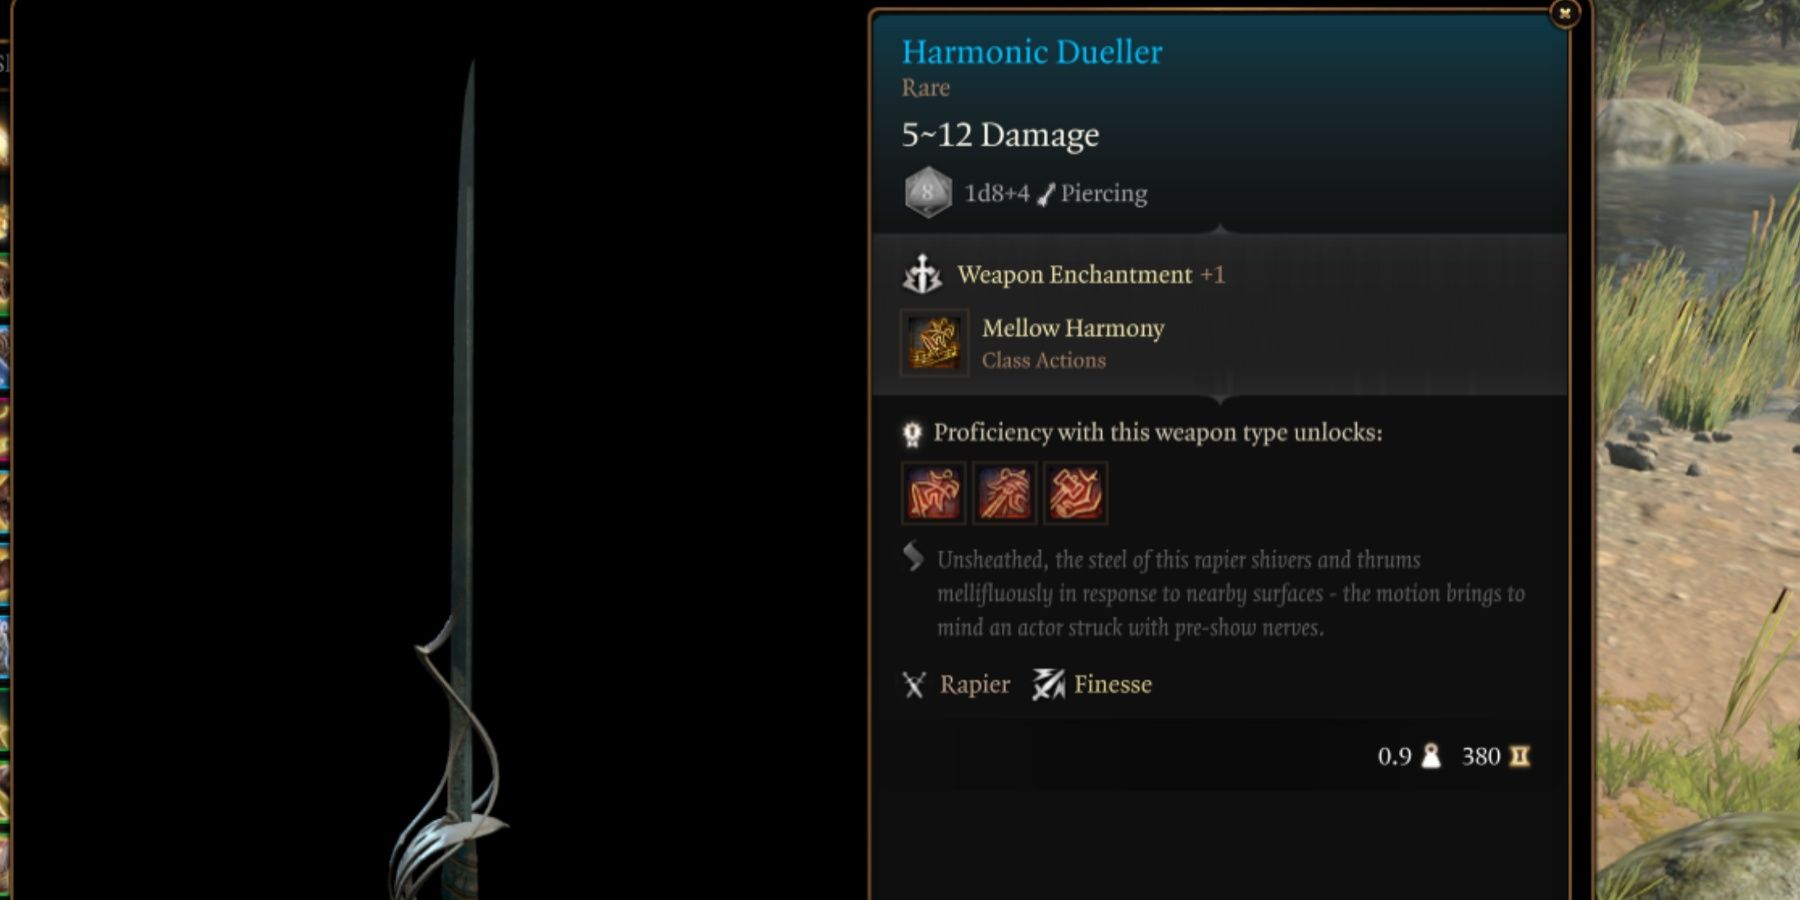 BG3 Harmonic Dueller in-game item menu description